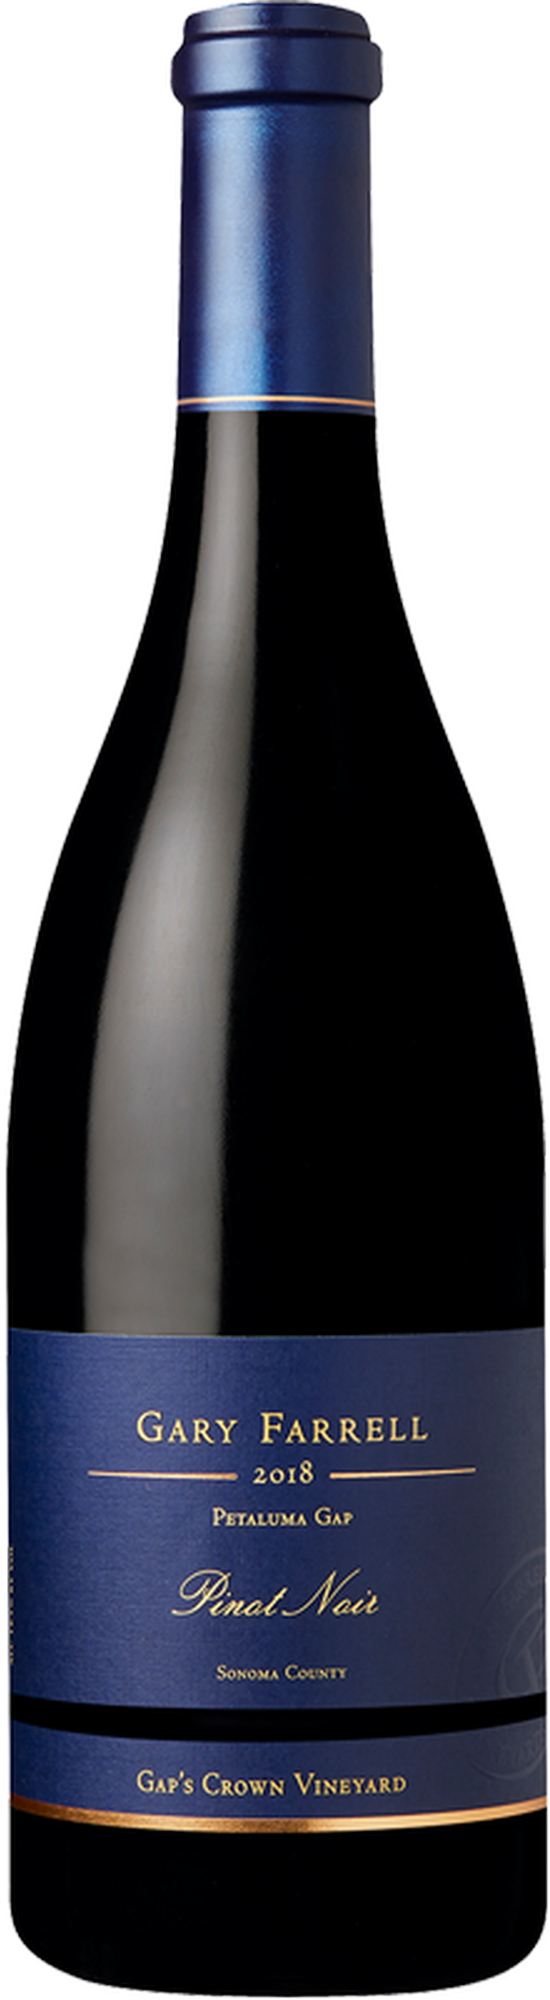 2018 Gap's Crown Vineyard Pinot Noir